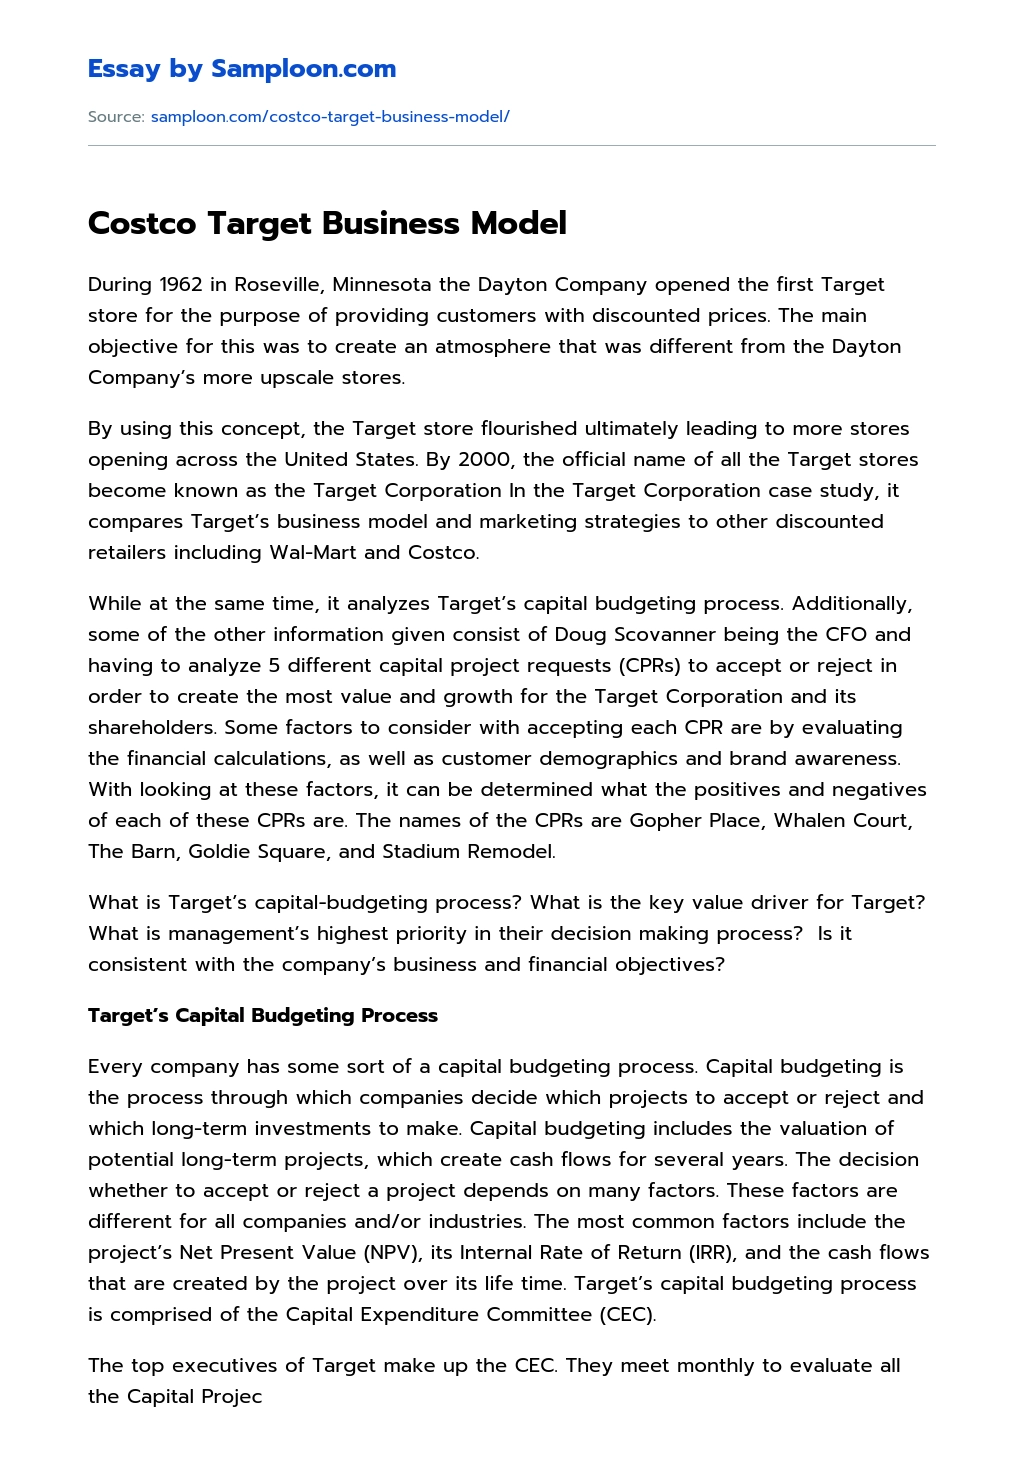 Costco Target Business Model essay